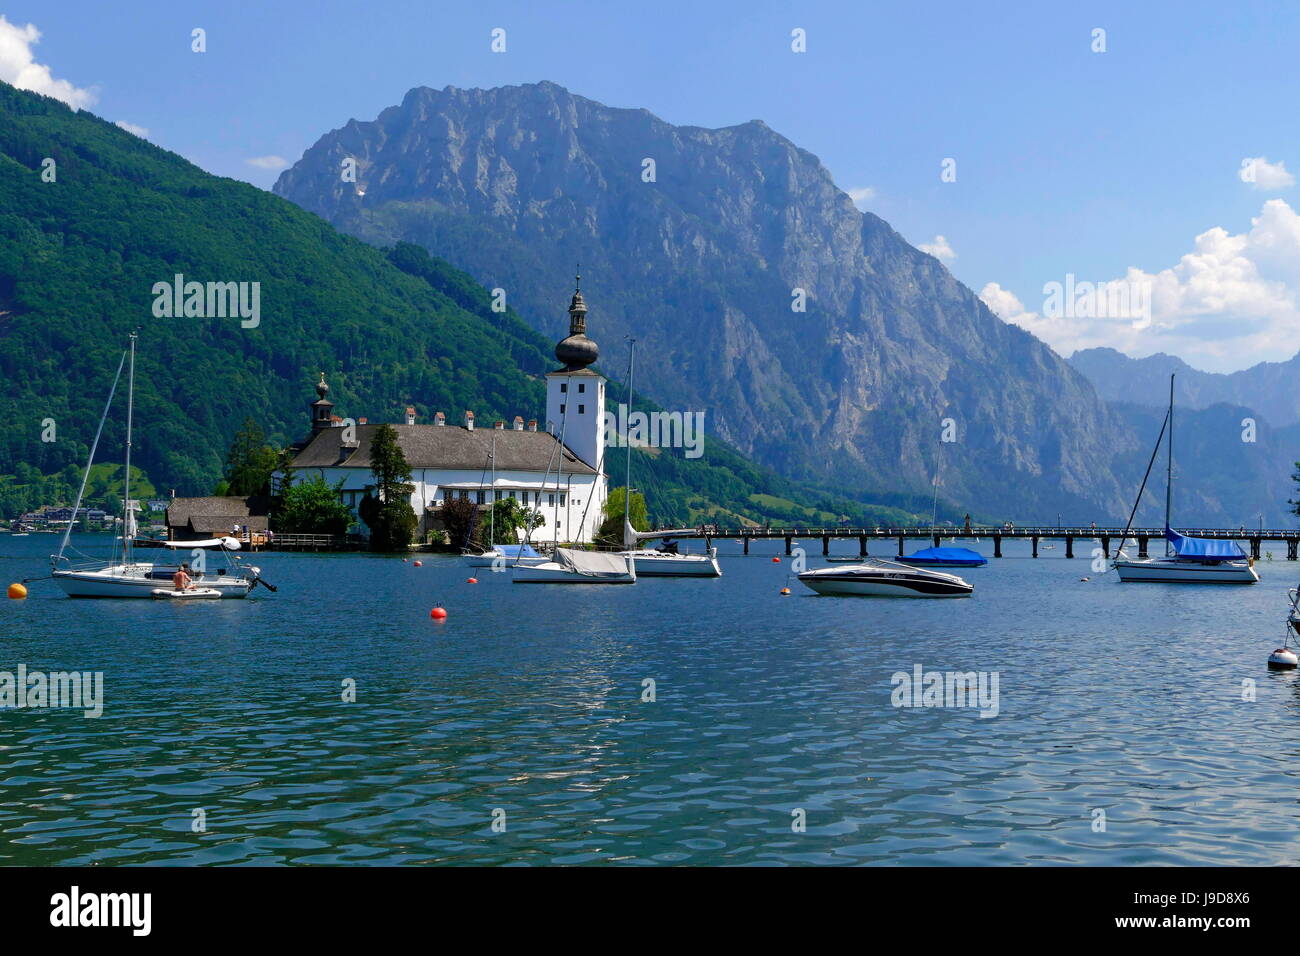 Ort Castillo en la ciudad de Gmunden en el lago Traunsee, Salzkammergut, Upper Austria, Austria, Europa Foto de stock